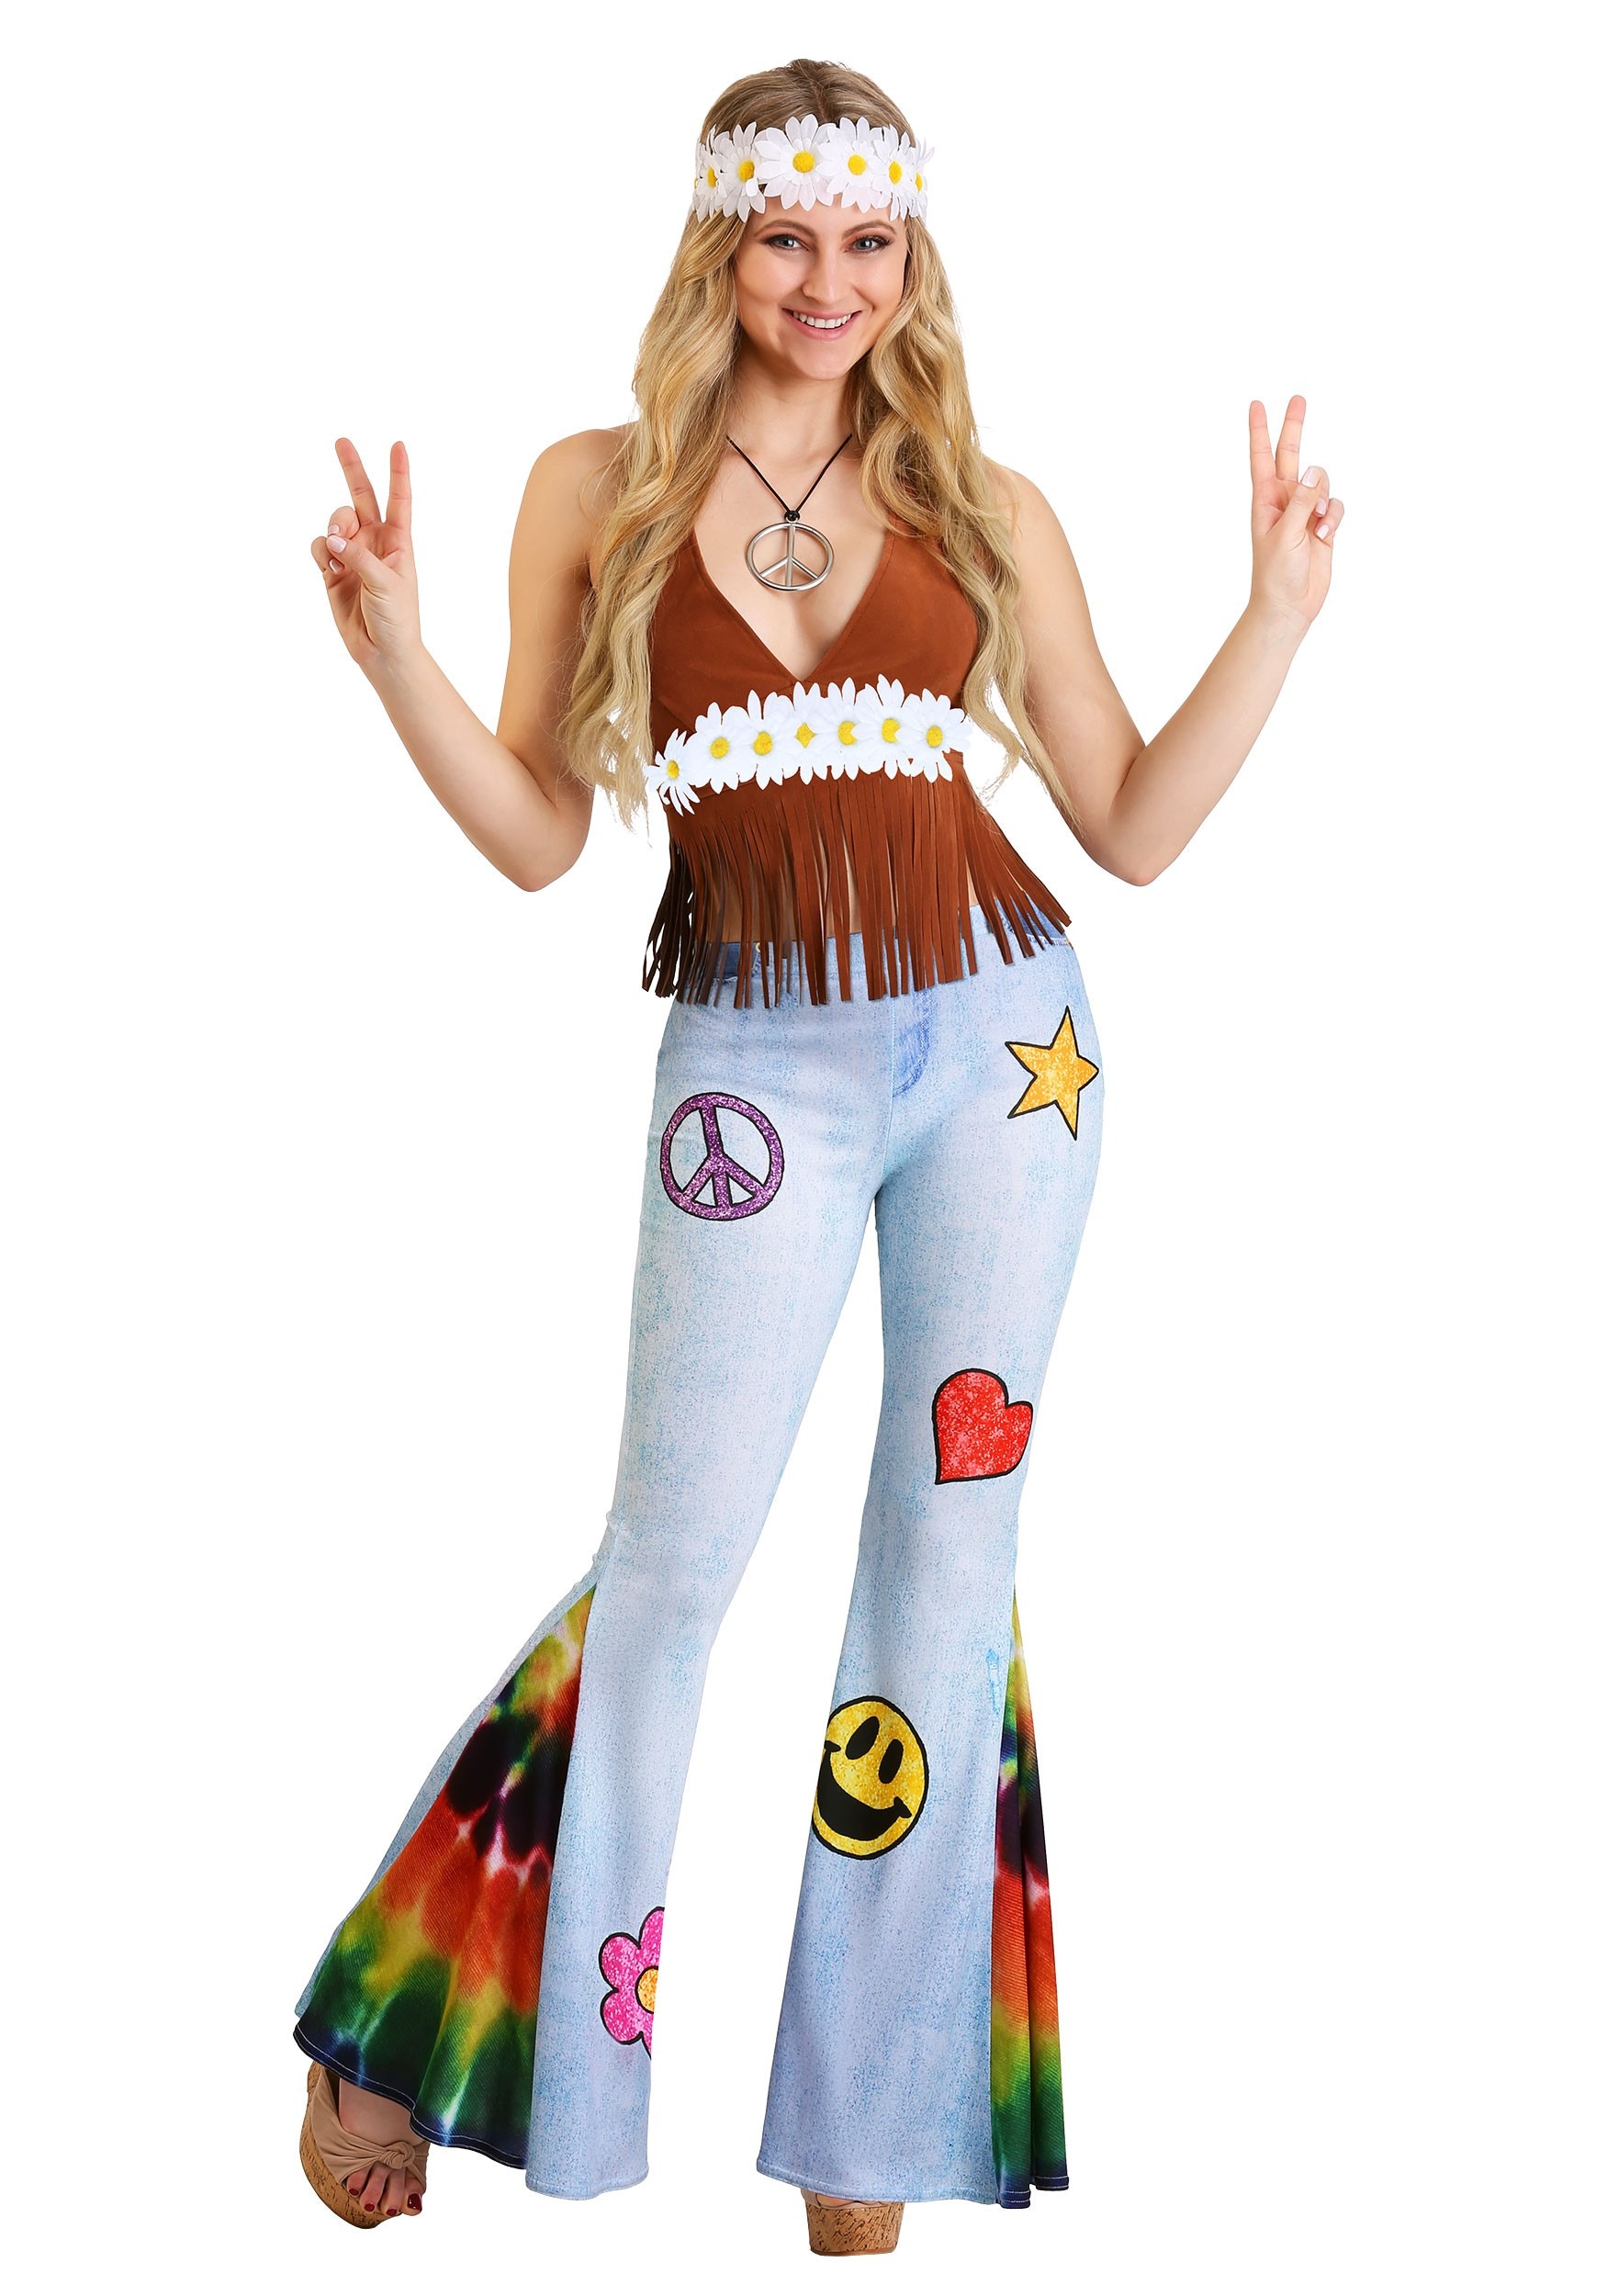 Hippie costume for women